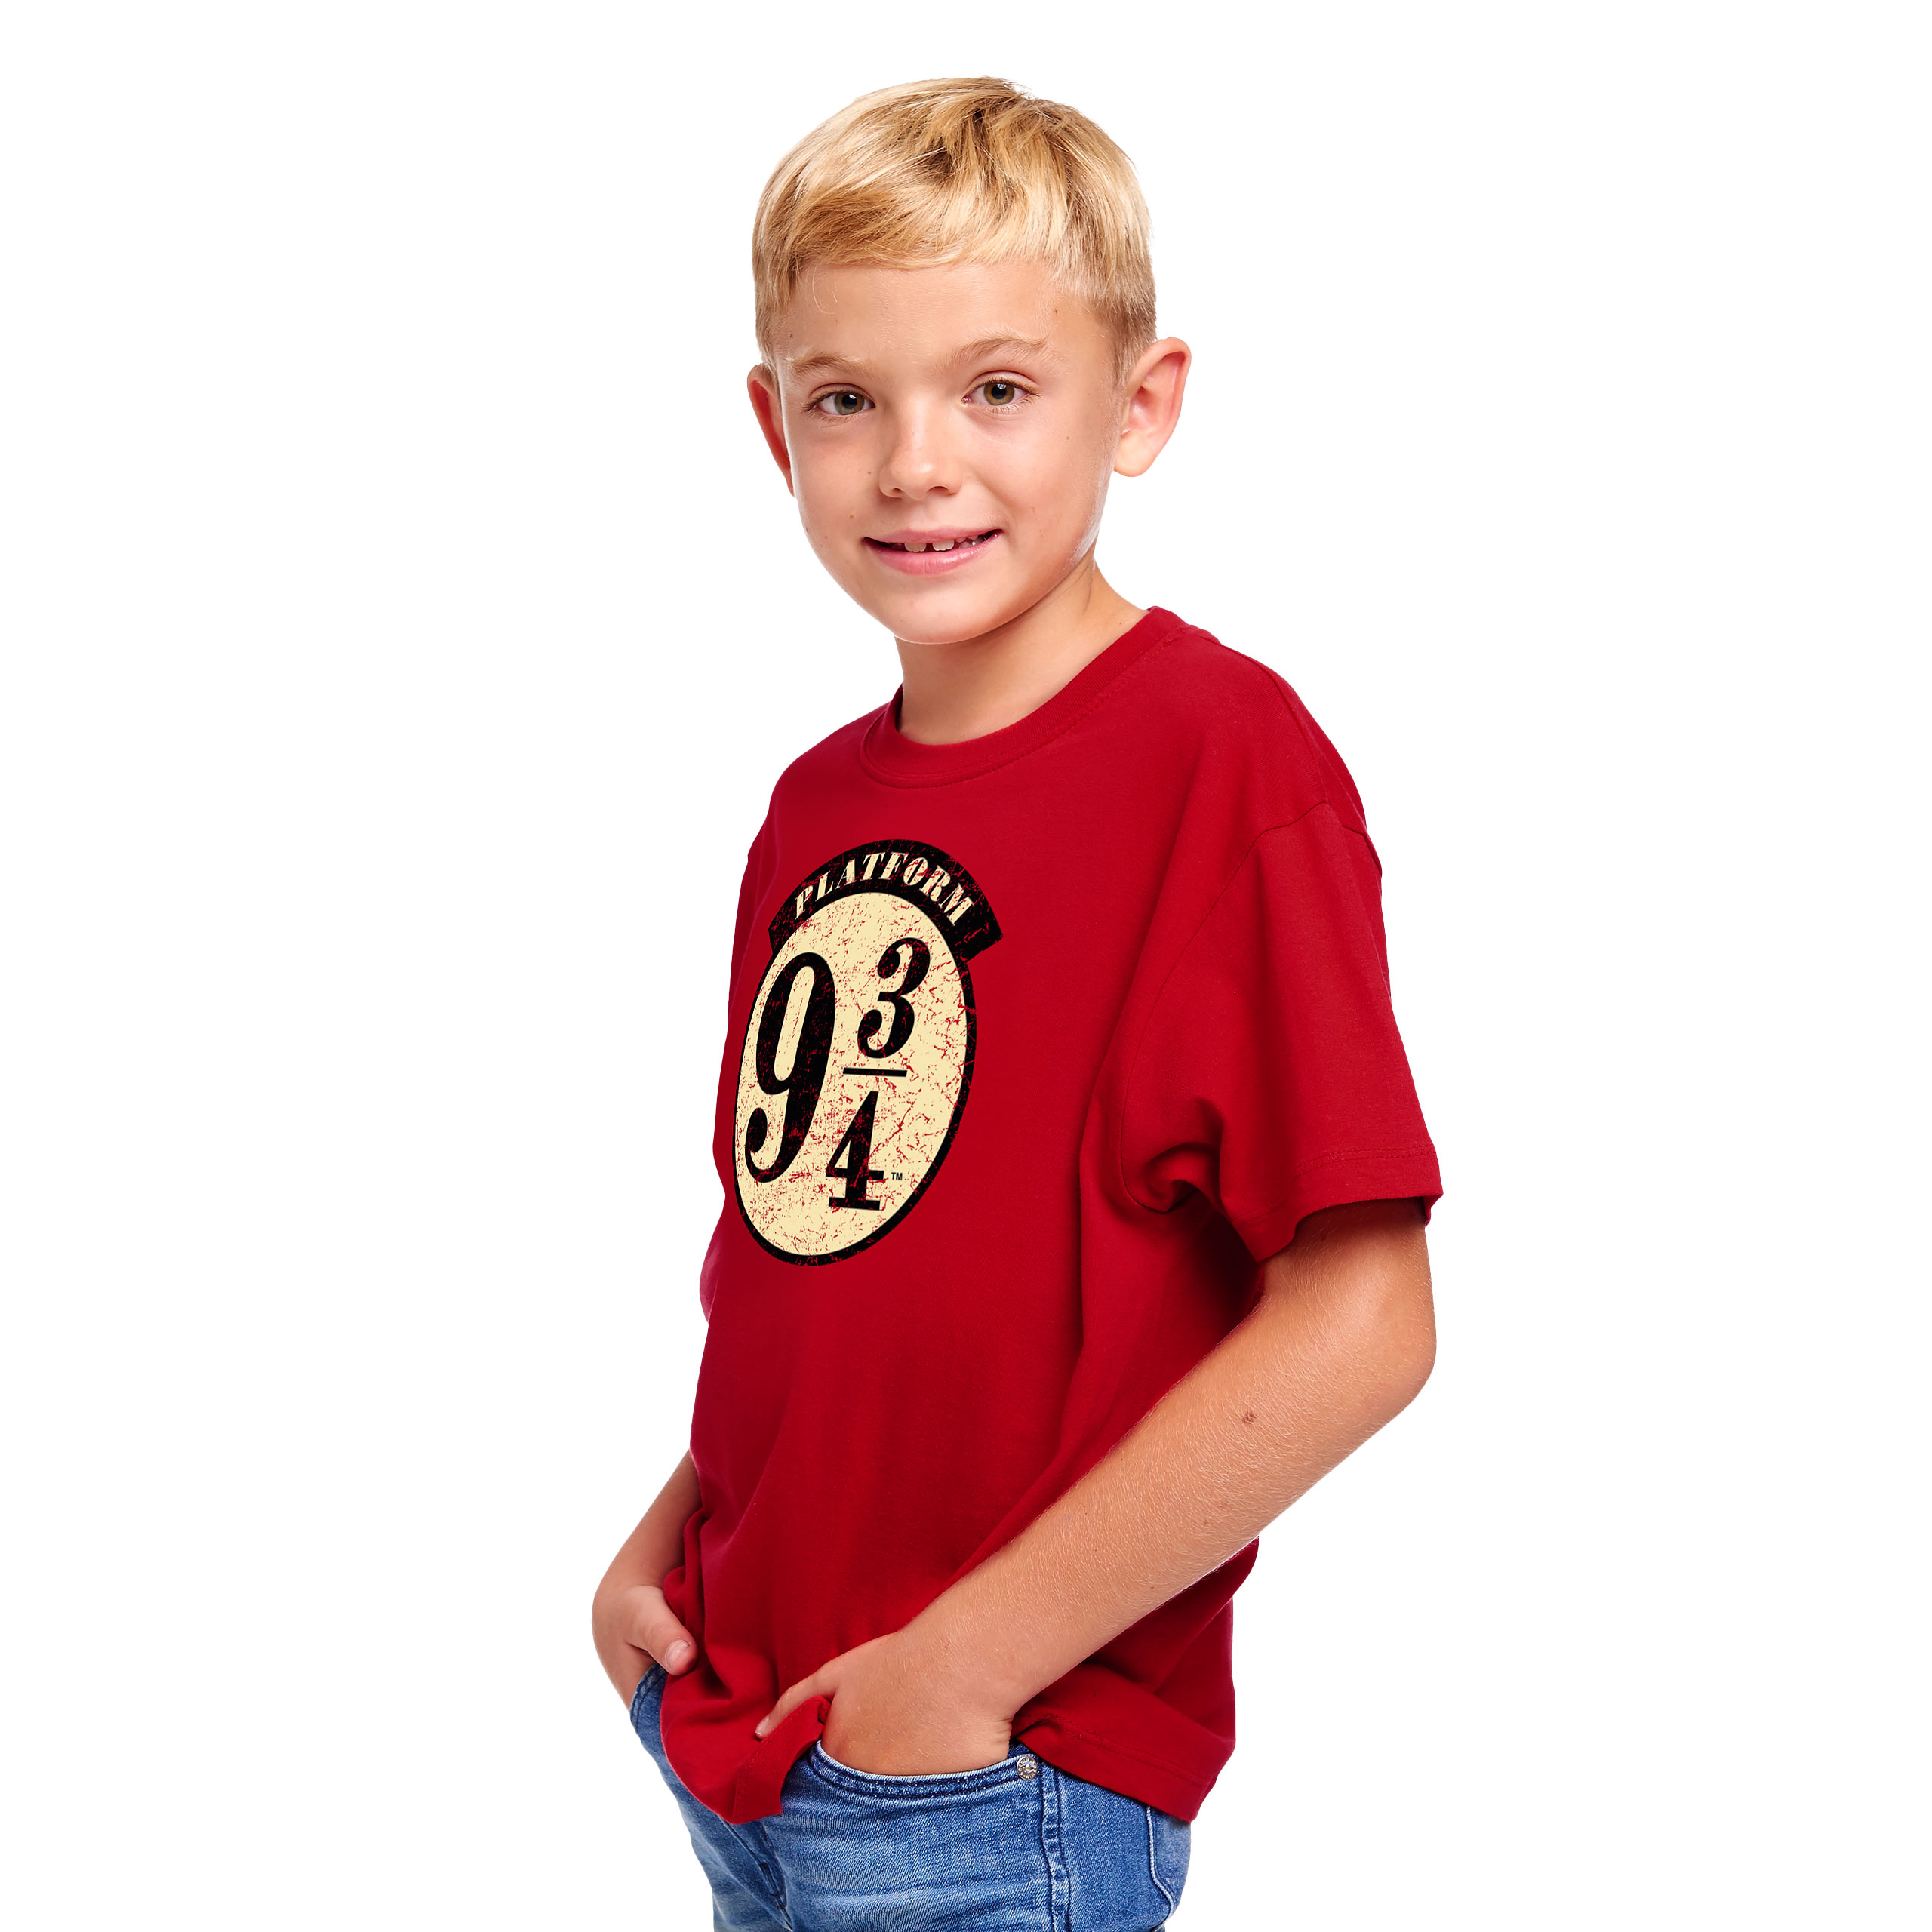 Harry Potter - 9 3/4 T-Shirt Kinder rot